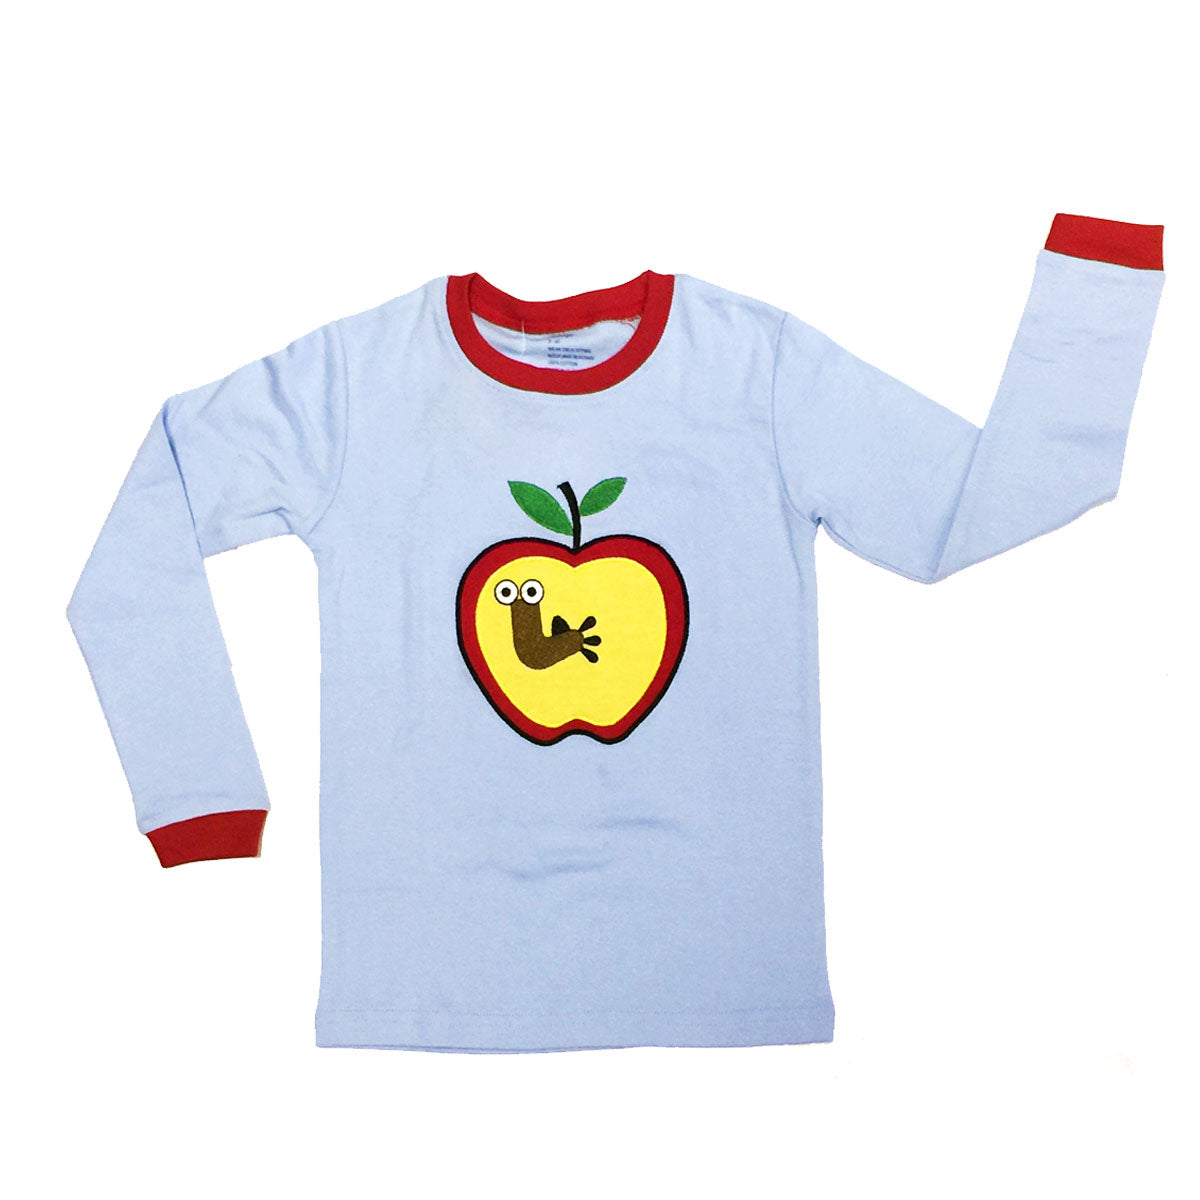 Dabuyu ABC Apple Children's Pajamas